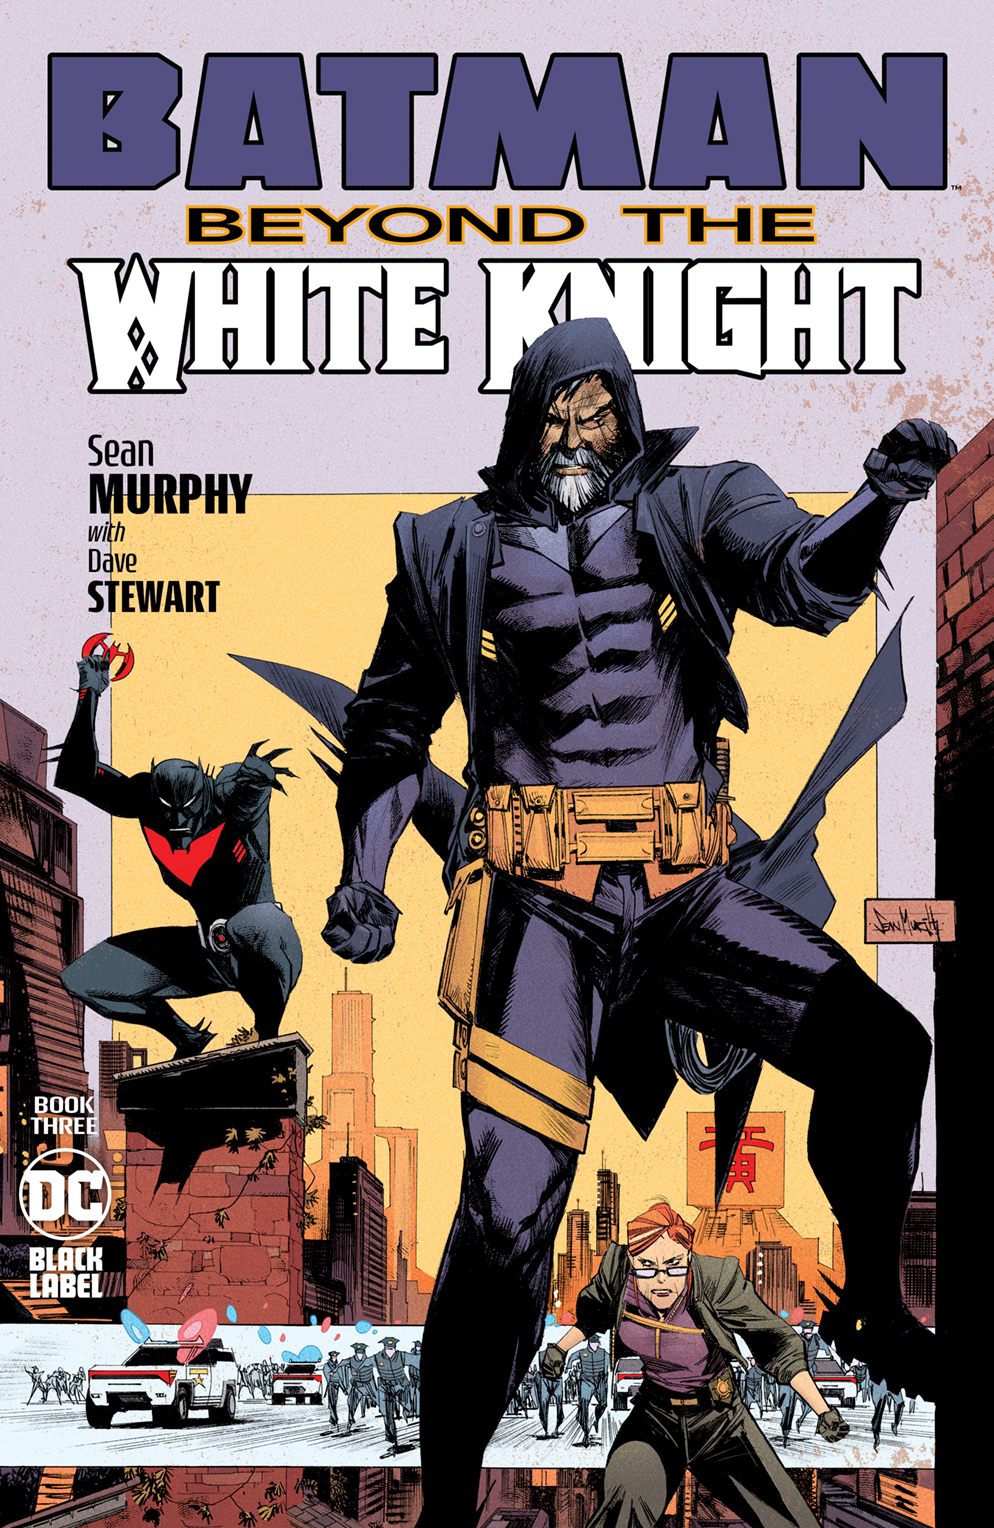 Batman Beyond The White Knight #3 Cover A Sean Murphy (Mature) (Of 8)